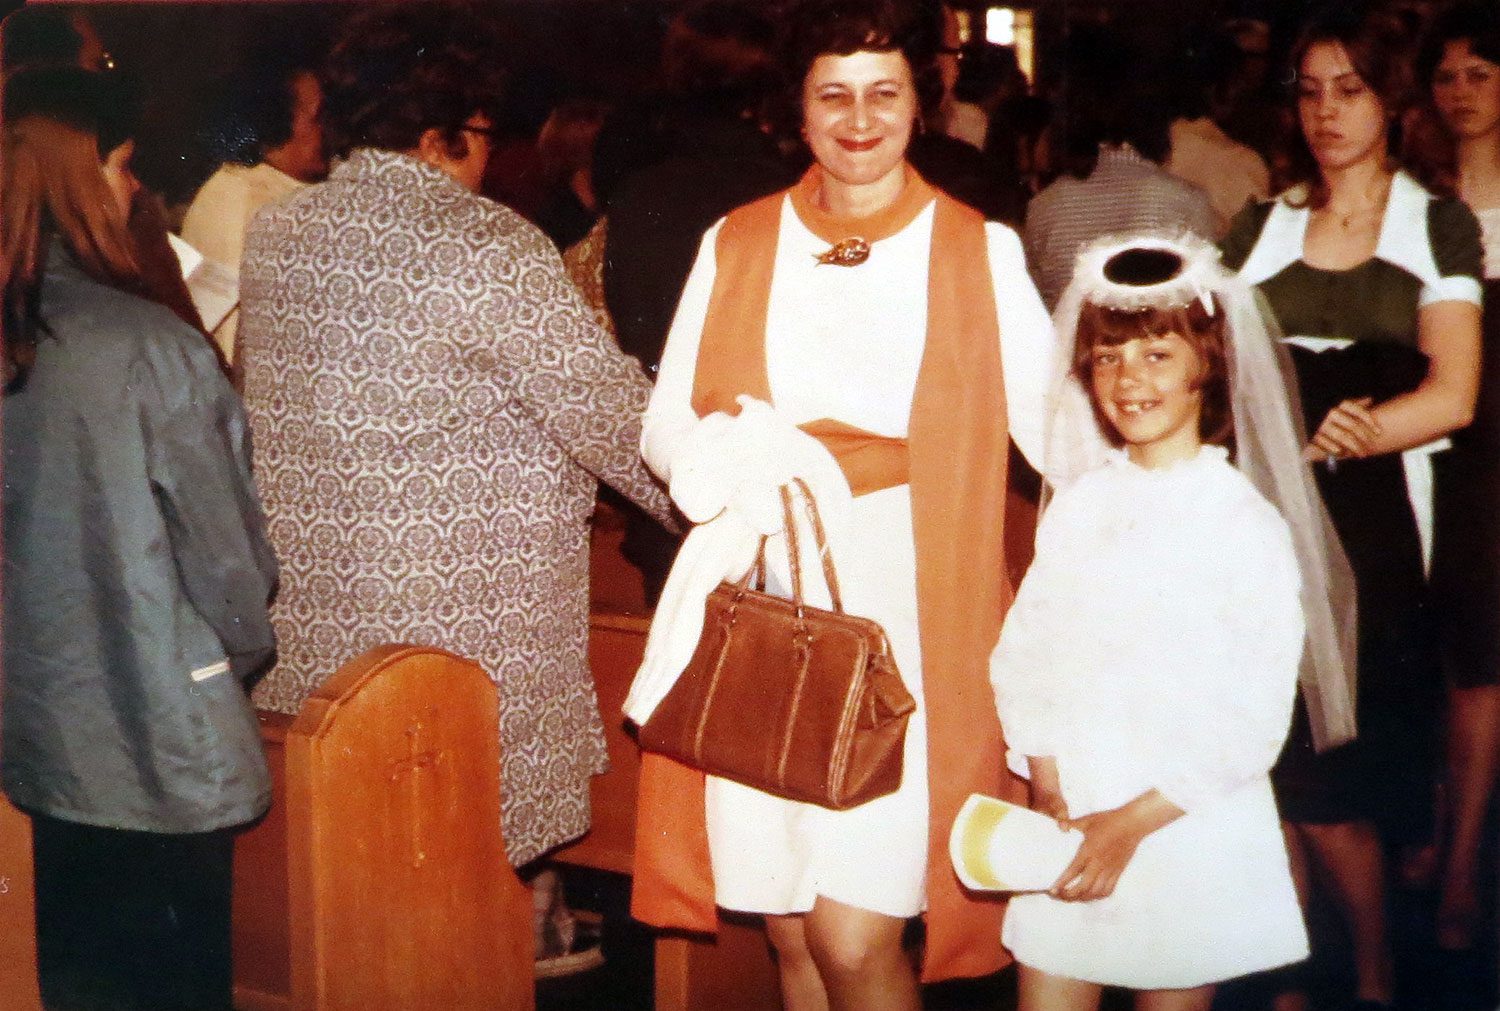 First Communion: Carol and Amy Dibble, 1974, St. Mary's Catholic Church, Kenosha, WI